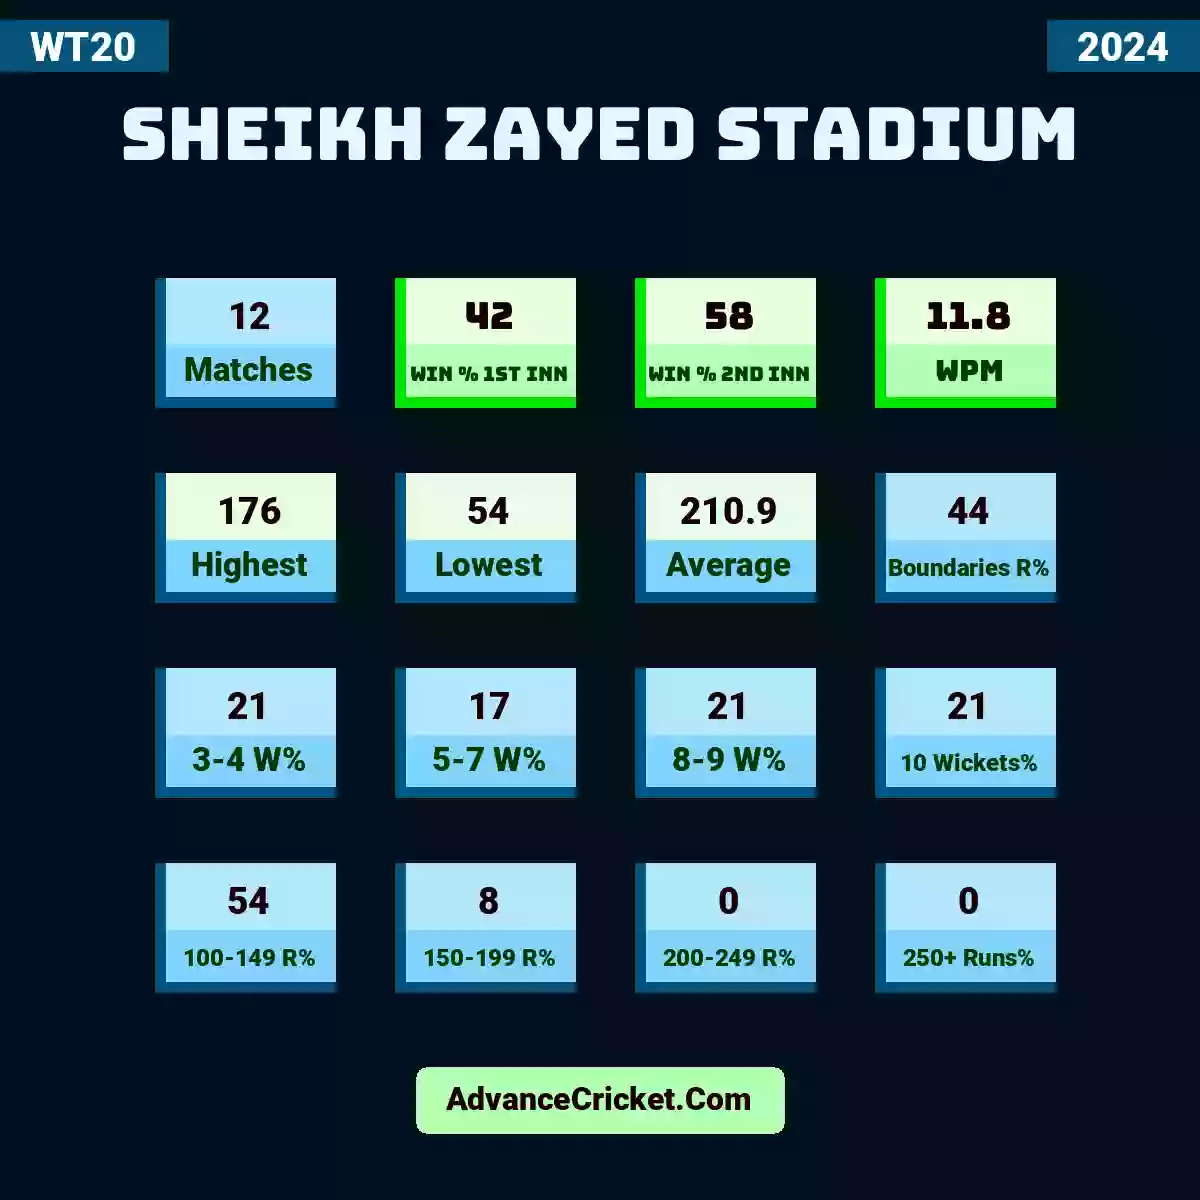 Image showing Sheikh Zayed Stadium WT20 2024 with Matches: 10, Win % 1st Inn: 40, Win % 2nd Inn: 60, WPM: 11.8, Highest: 176, Lowest: 54, Average: 202.6, Boundaries R%: 44.8, 3-4 W%: 25, 5-7 W%: 10, 8-9 W%: 20, 10 Wickets%: 25, 100-149 R%: 45, 150-199 R%: 10, 200-249 R%: 0, 250+ Runs%: 0.